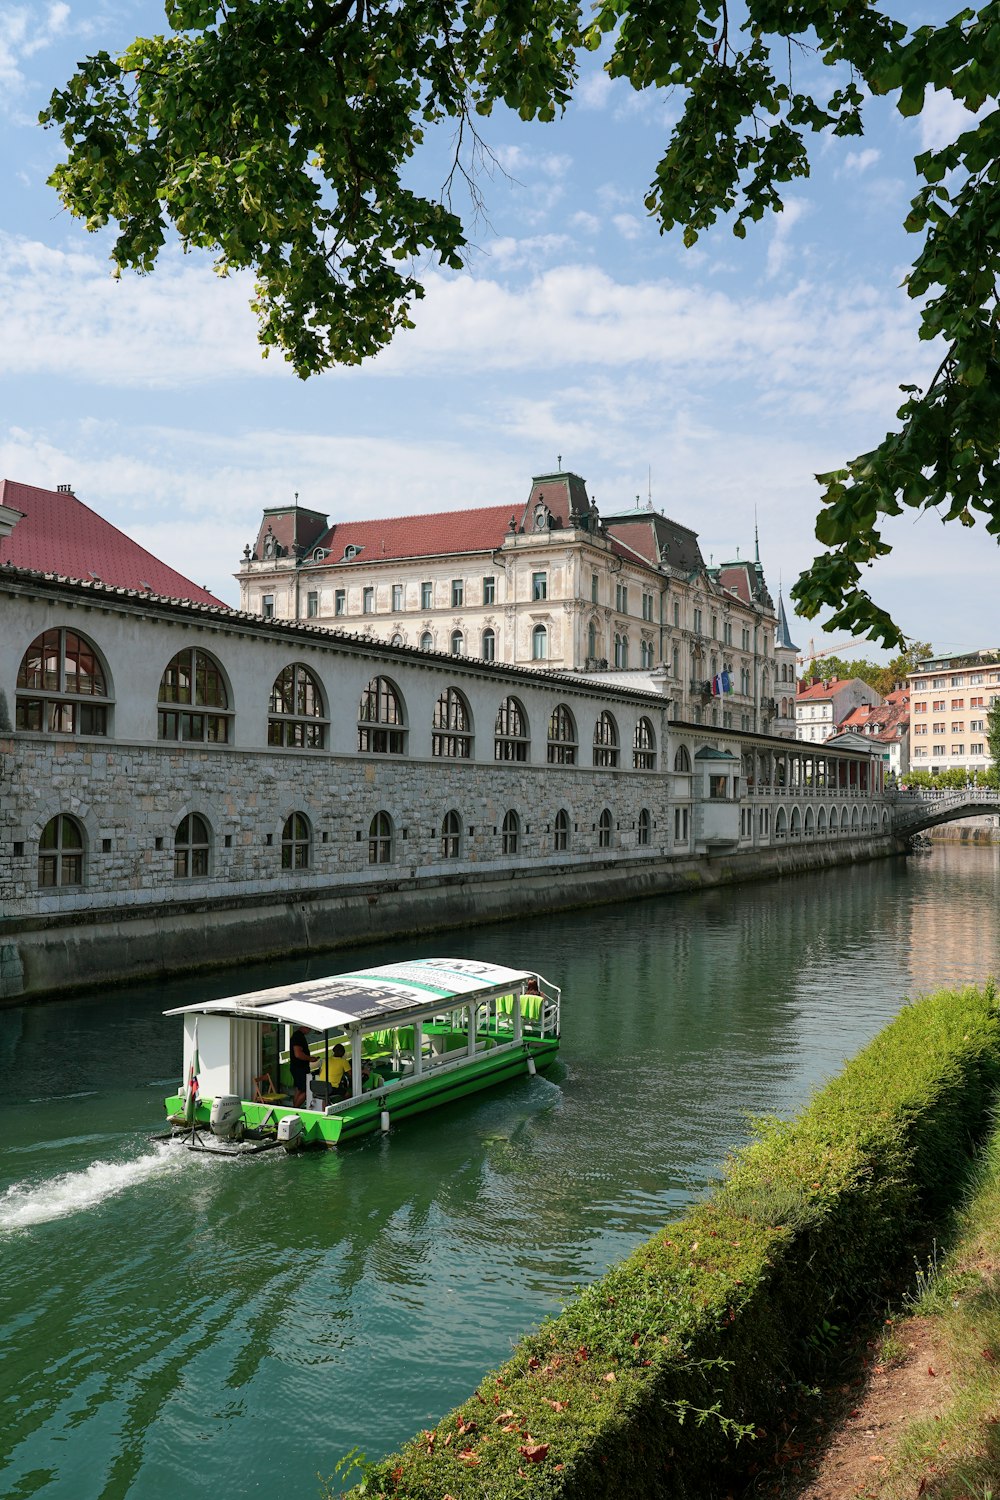 Un barco verde que viaja río abajo junto a edificios altos